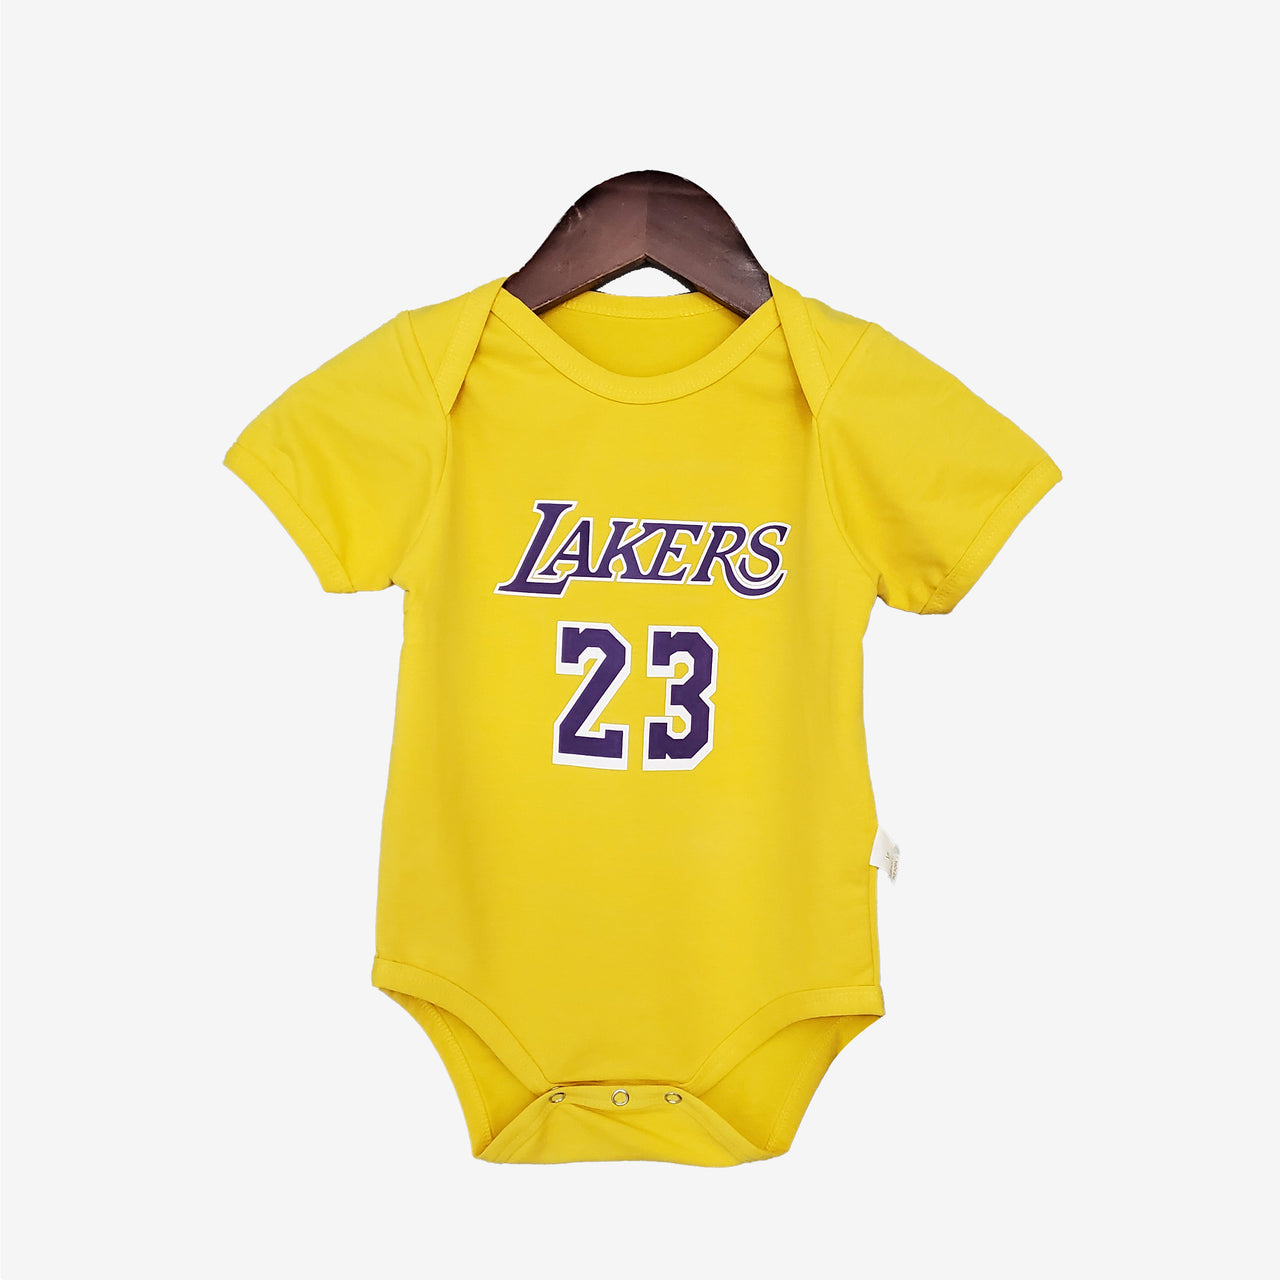 Lakers Baby Baumwolljersey Gelb